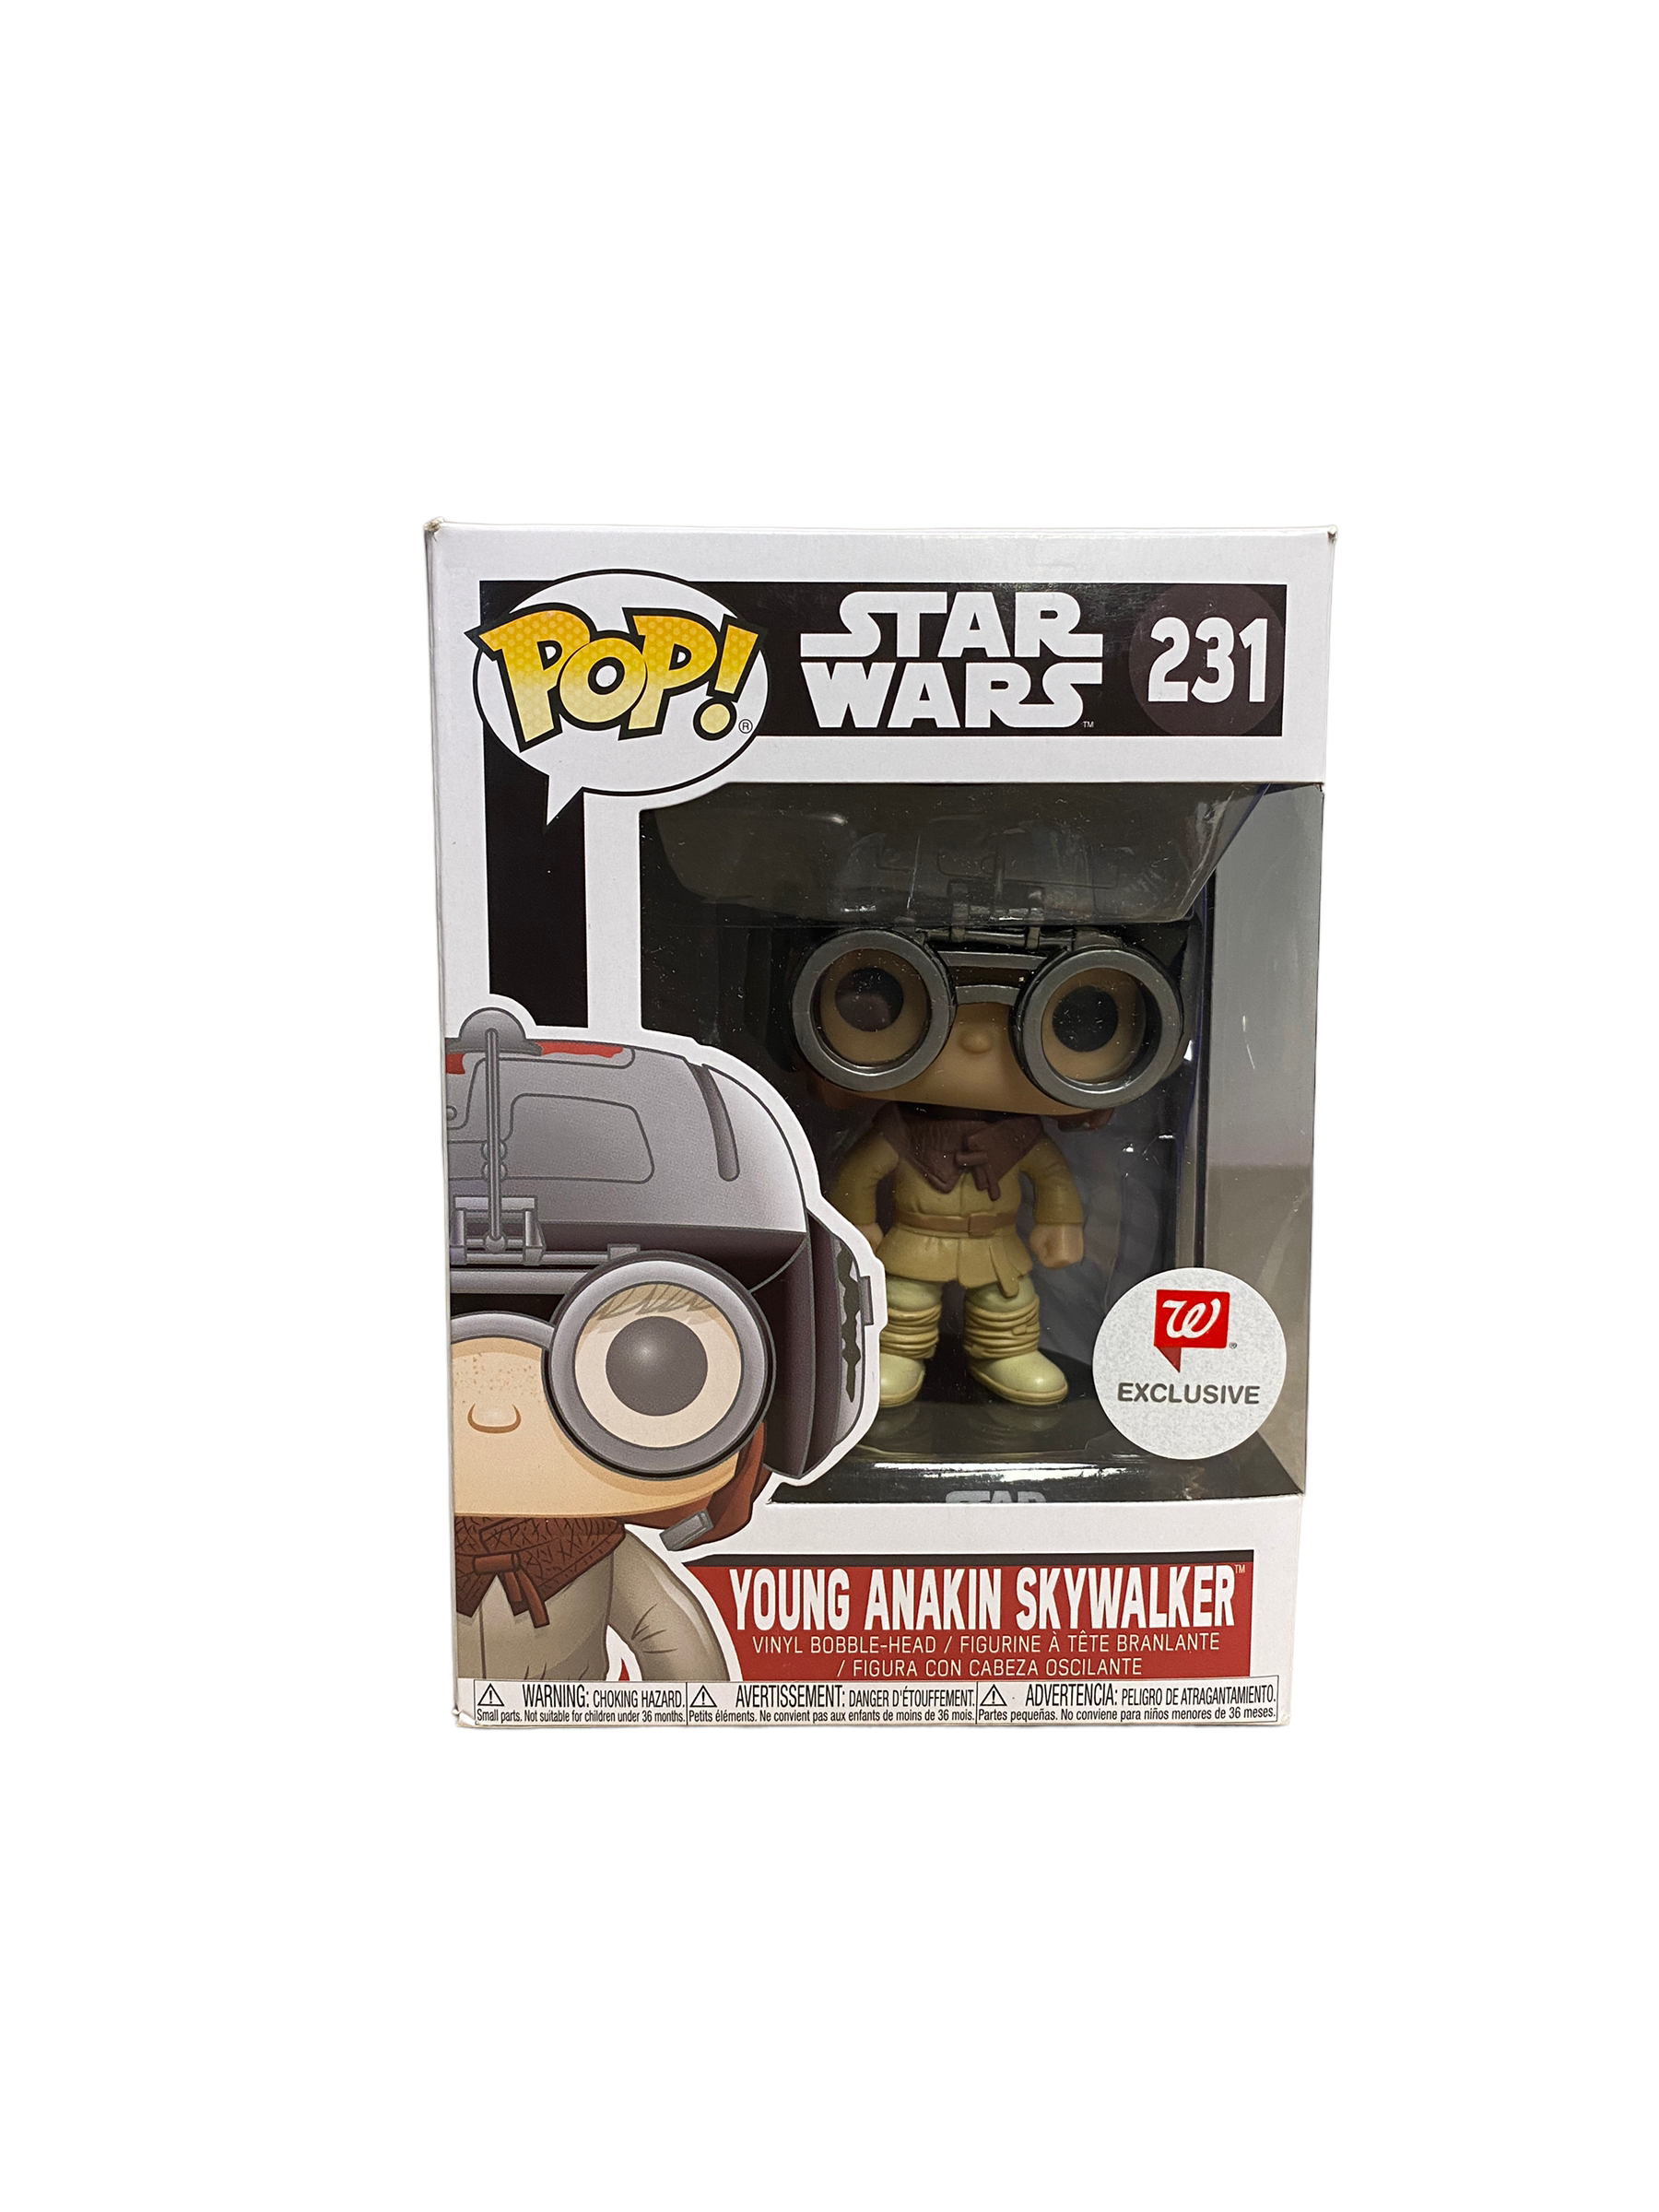 Young Anakin Skywalker #231 (Podracer) Funko Pop! - Star Wars - Walgreens Exclusive - Condition 8.75/10